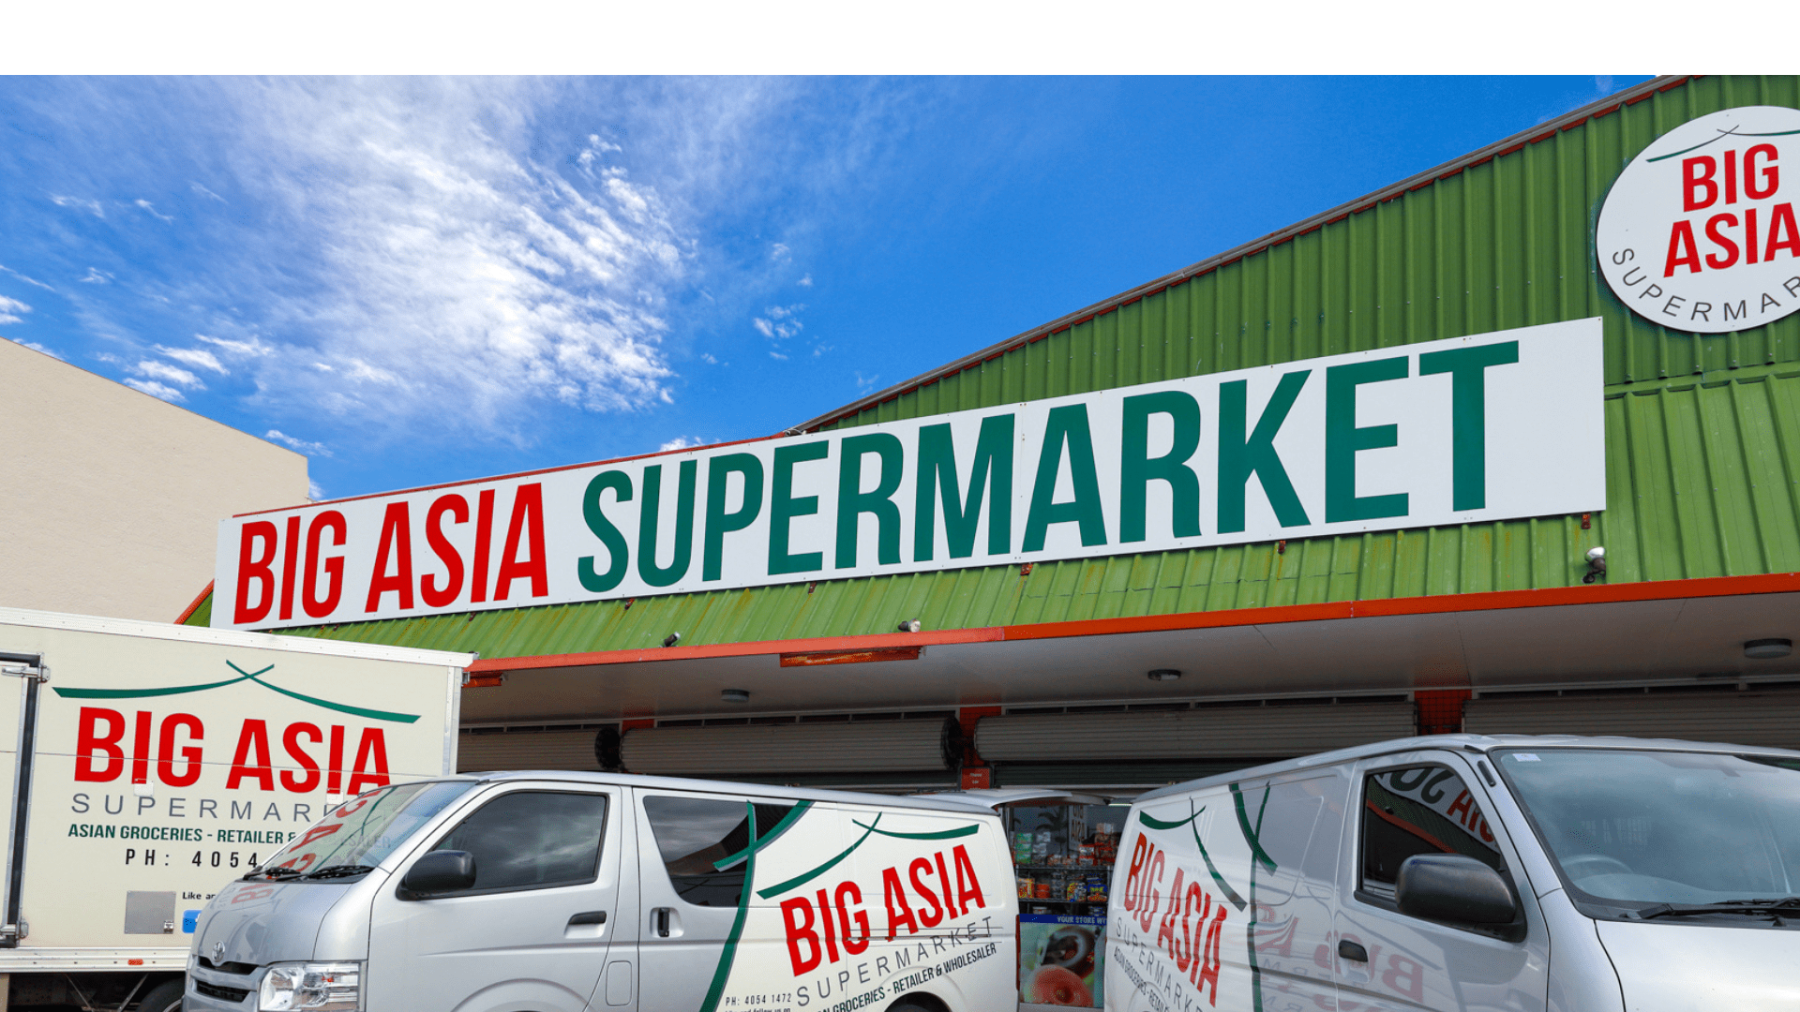 Big Asia Supermarket